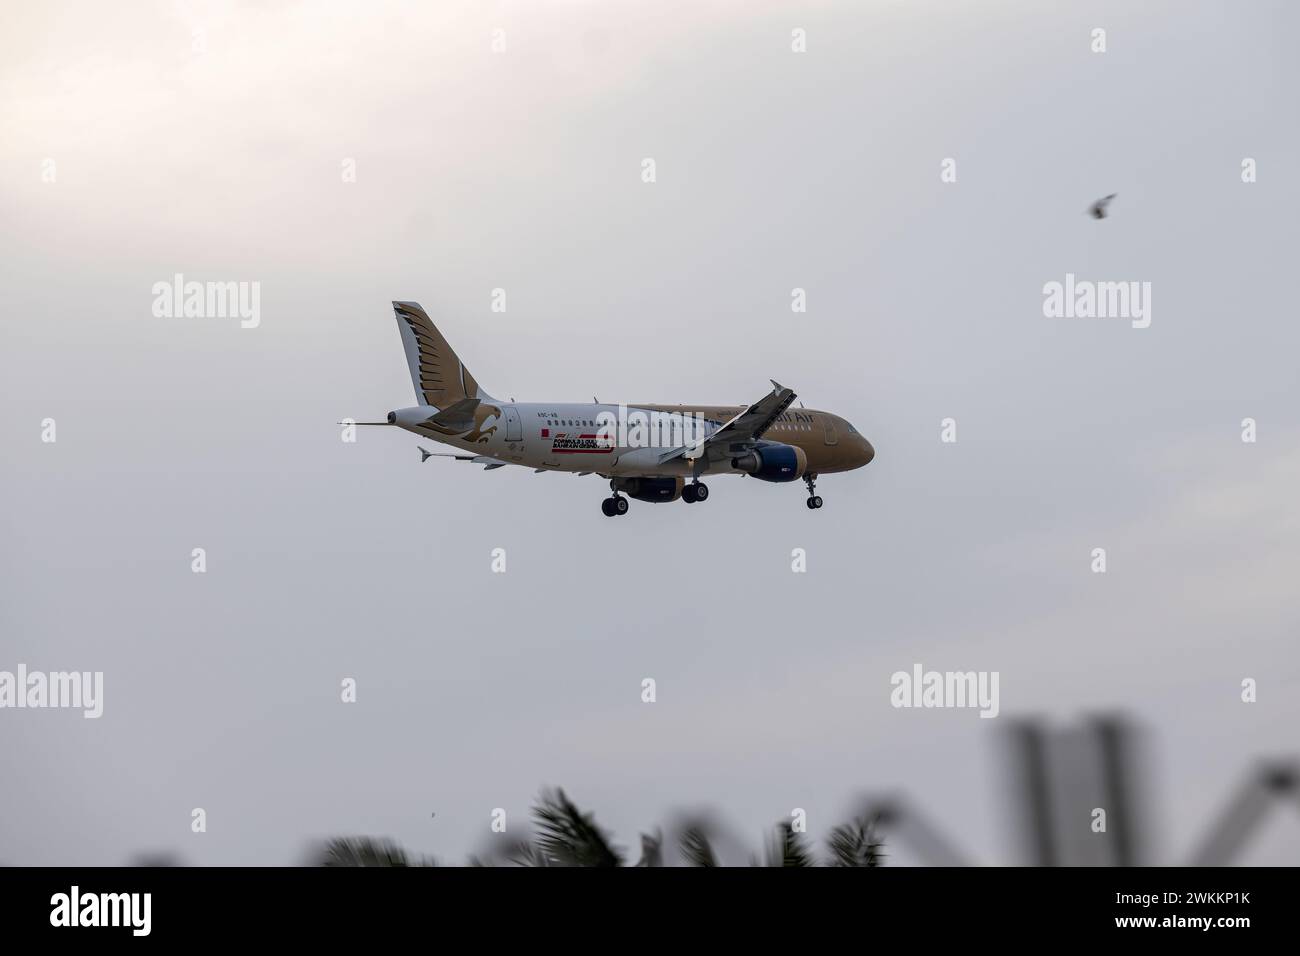 Gulf Air Airbus A320 Aircraft landing at the Bahrain International Airport Stock Photo